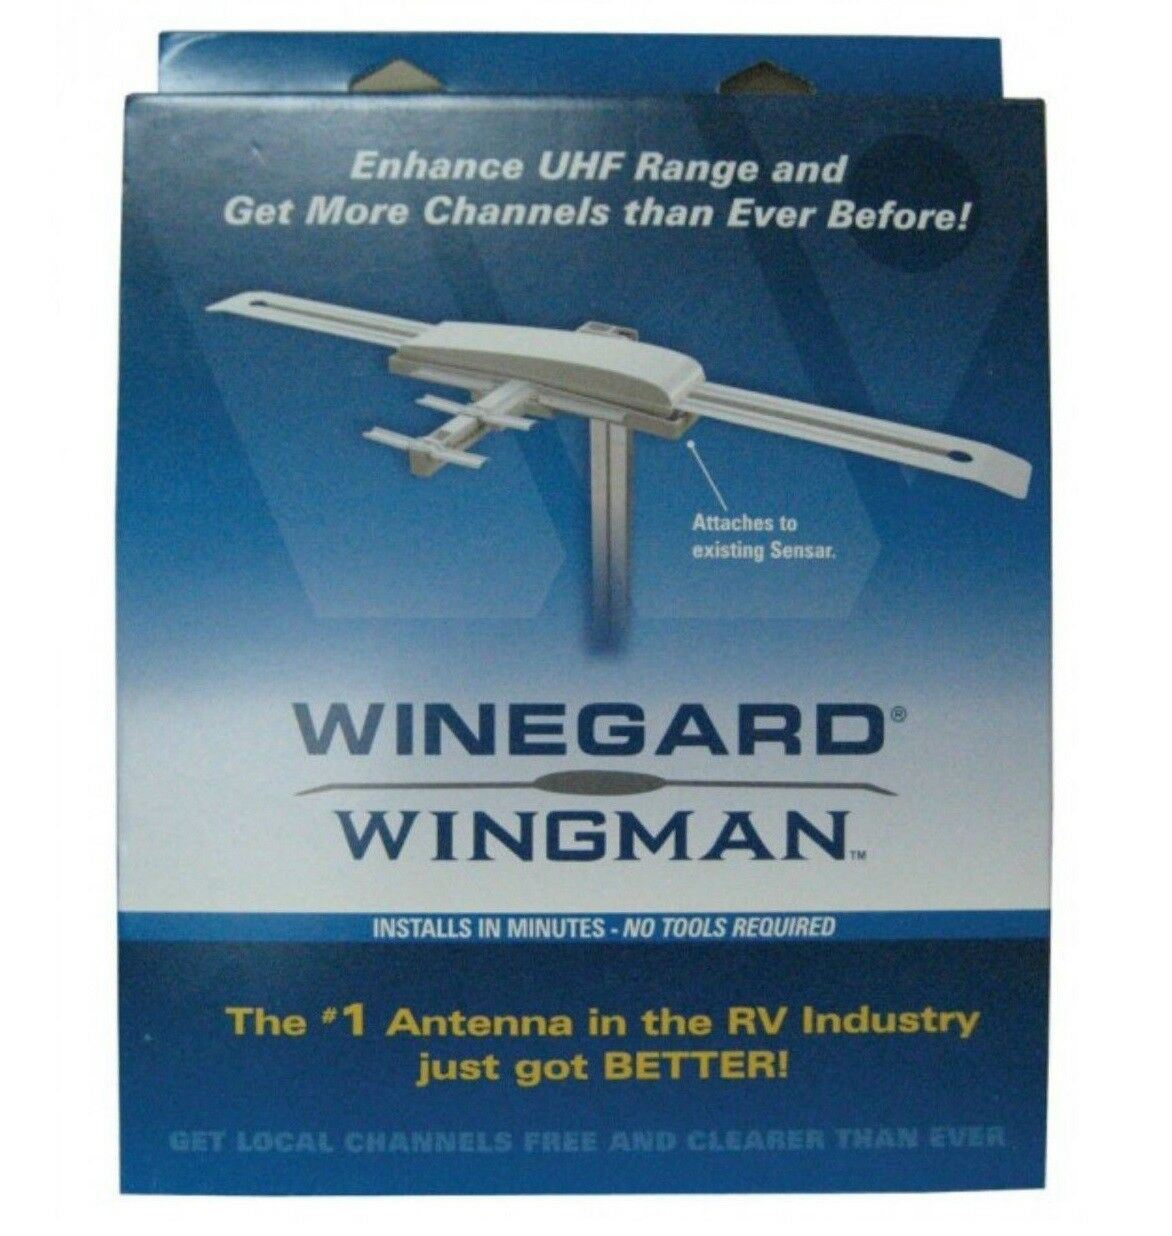 Winegard Wingman Attachment Add On To Suit Winegard Sensar Antennas 900-00410